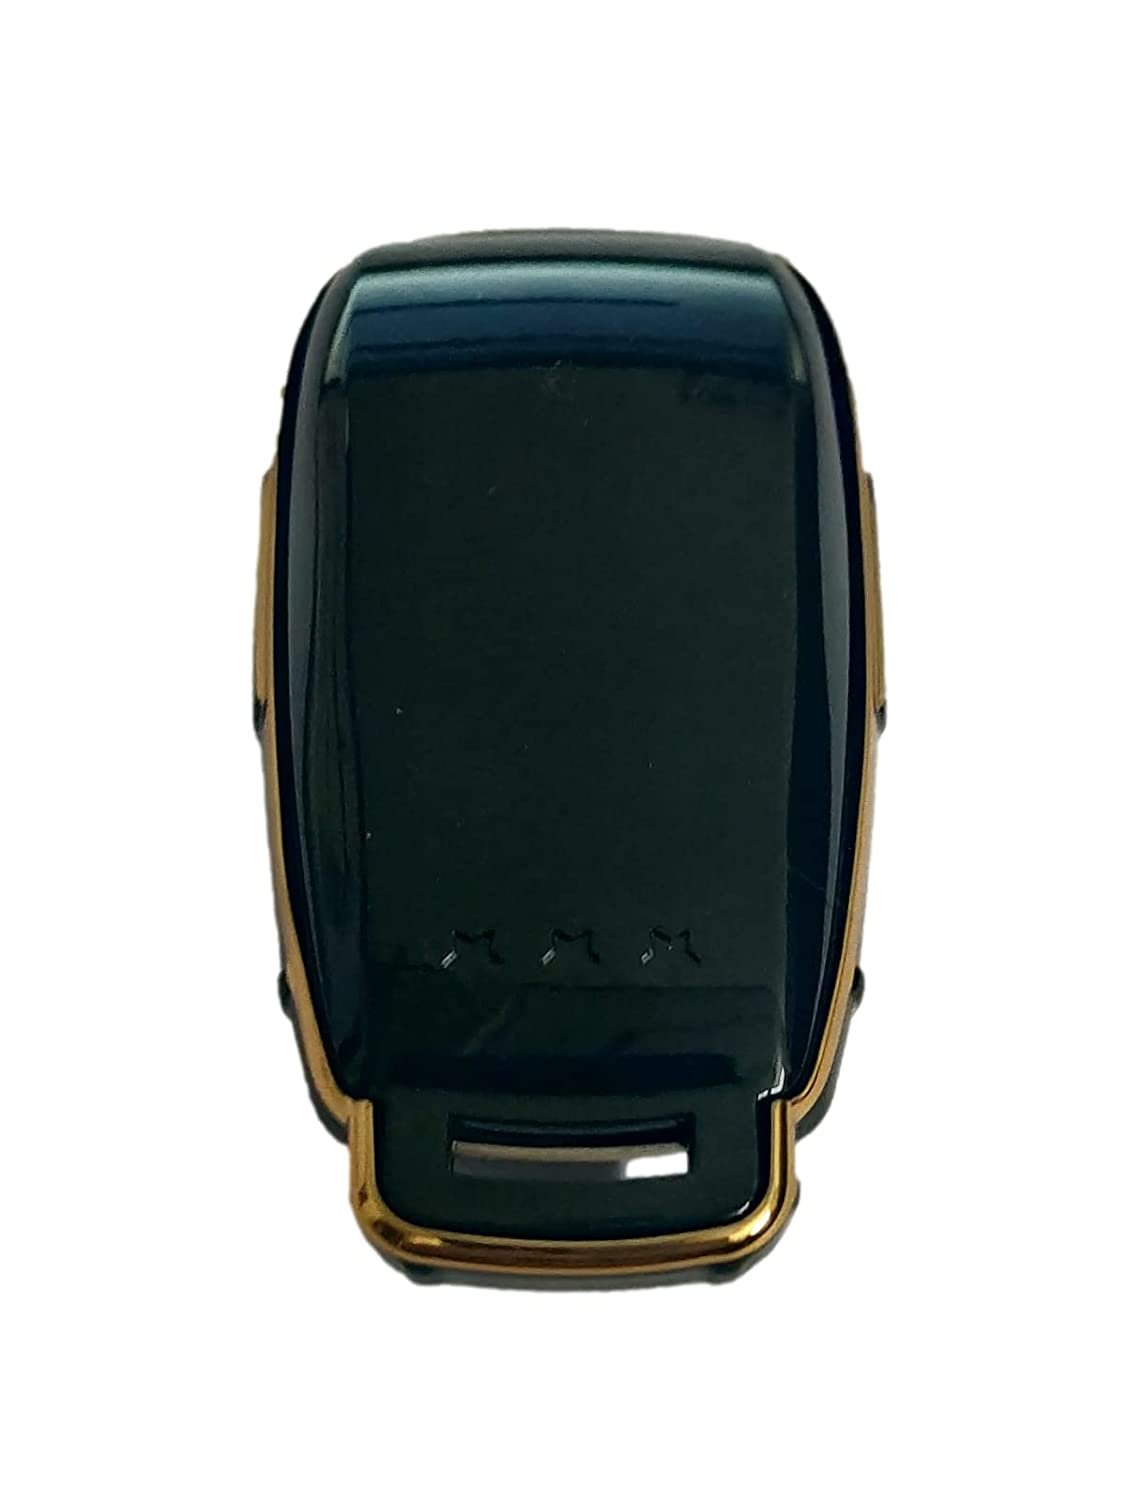 TPU Carbon Fiber Style Car Key Cover Compatible for Benz E Series Smart Key (Gold Black)